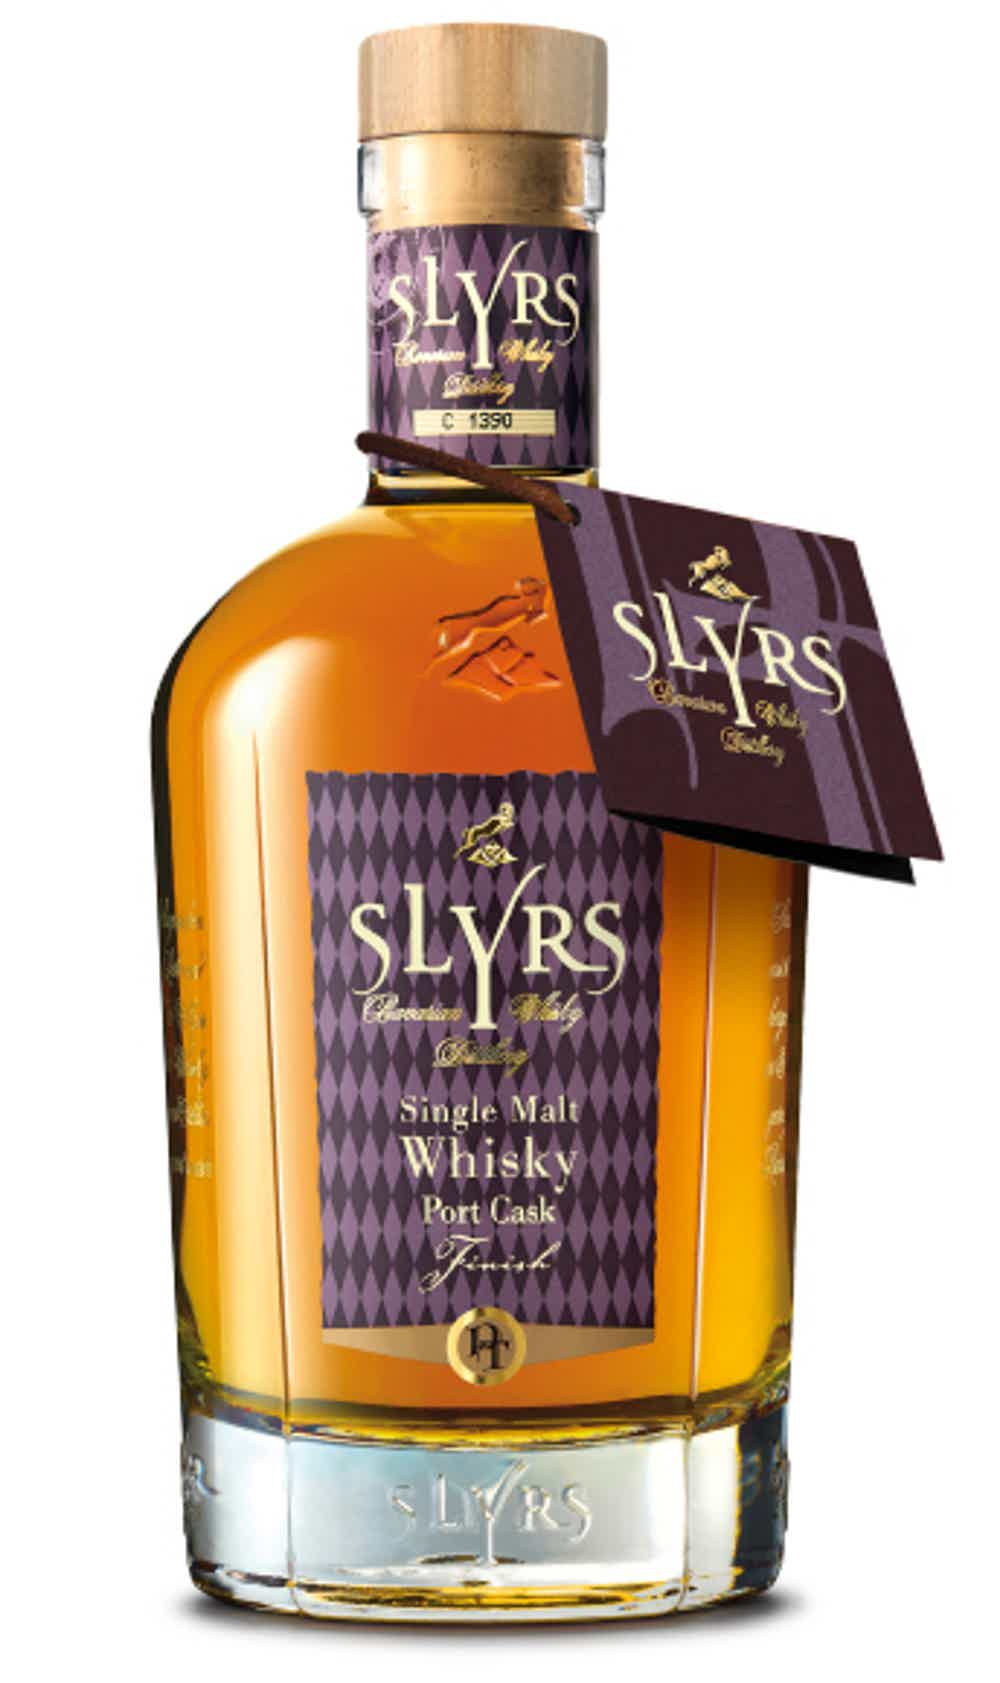 SLYRS Single Malt Whisky Port Cask Finish 46% vol. 46.0% 0.35L, Spirits